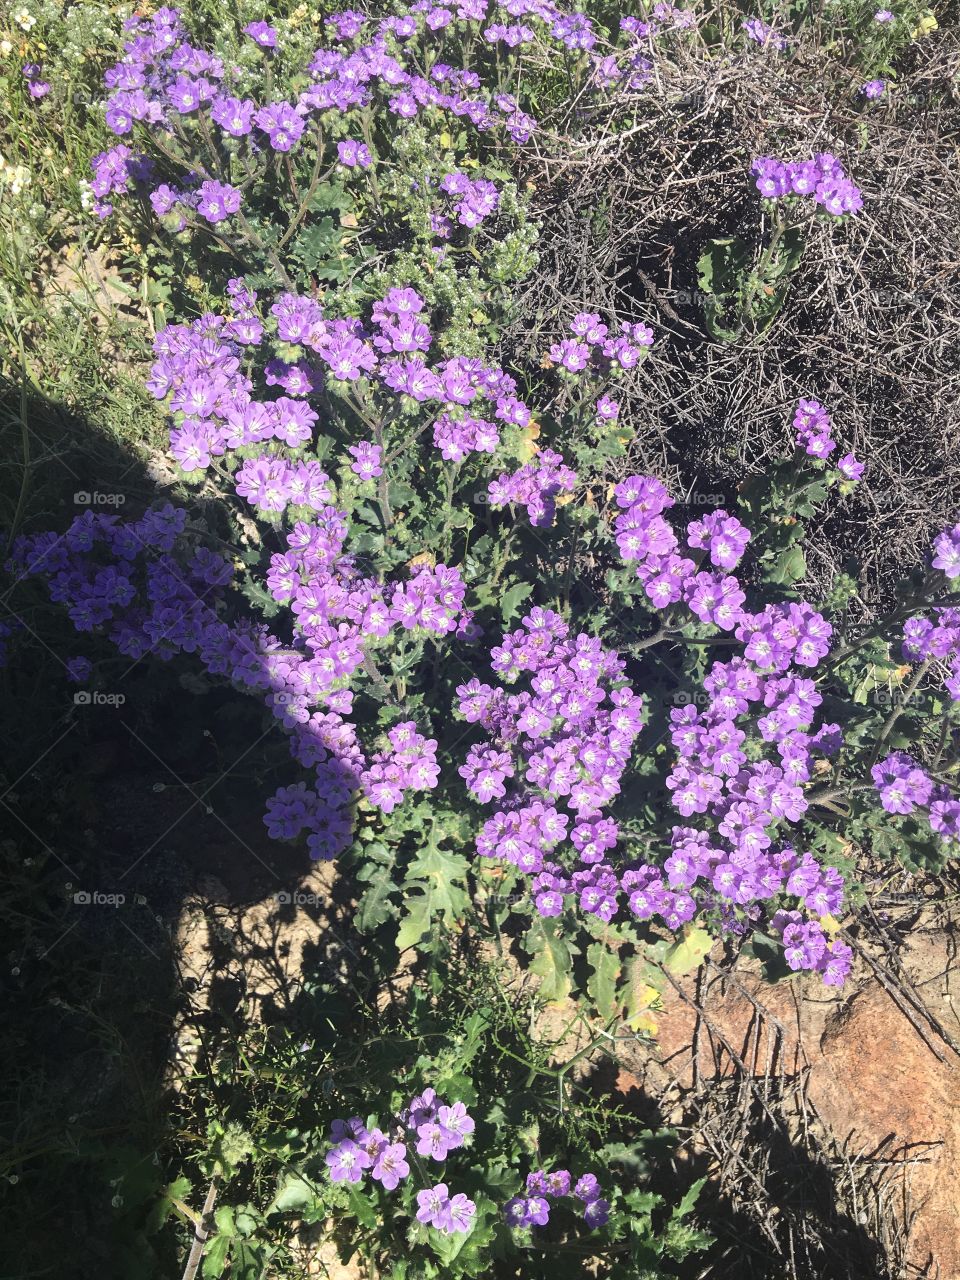 Wild desert flowers in bloom 